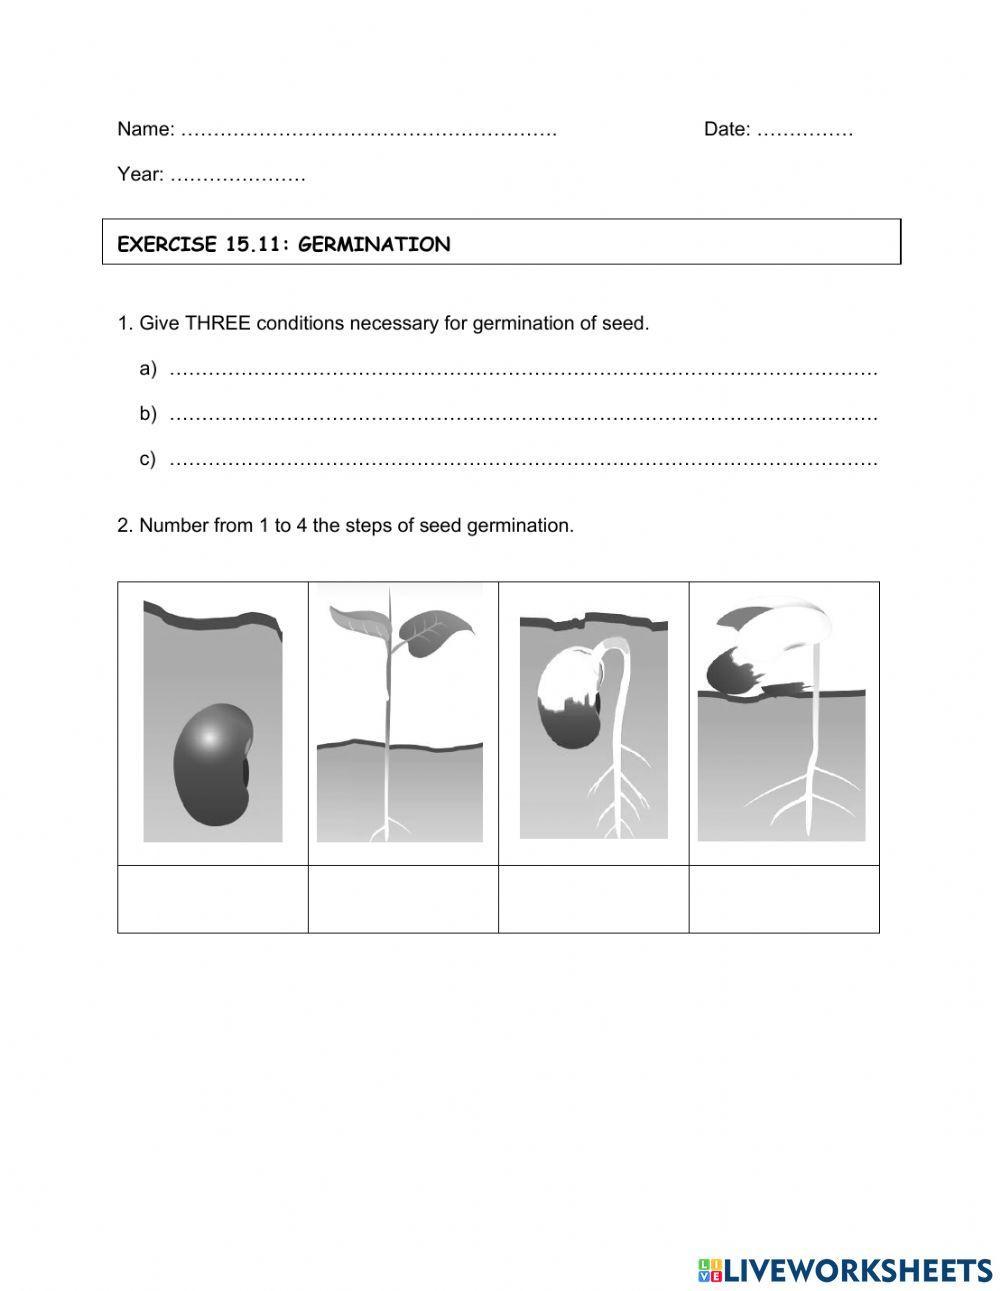 Exercise 15.11 (germination)